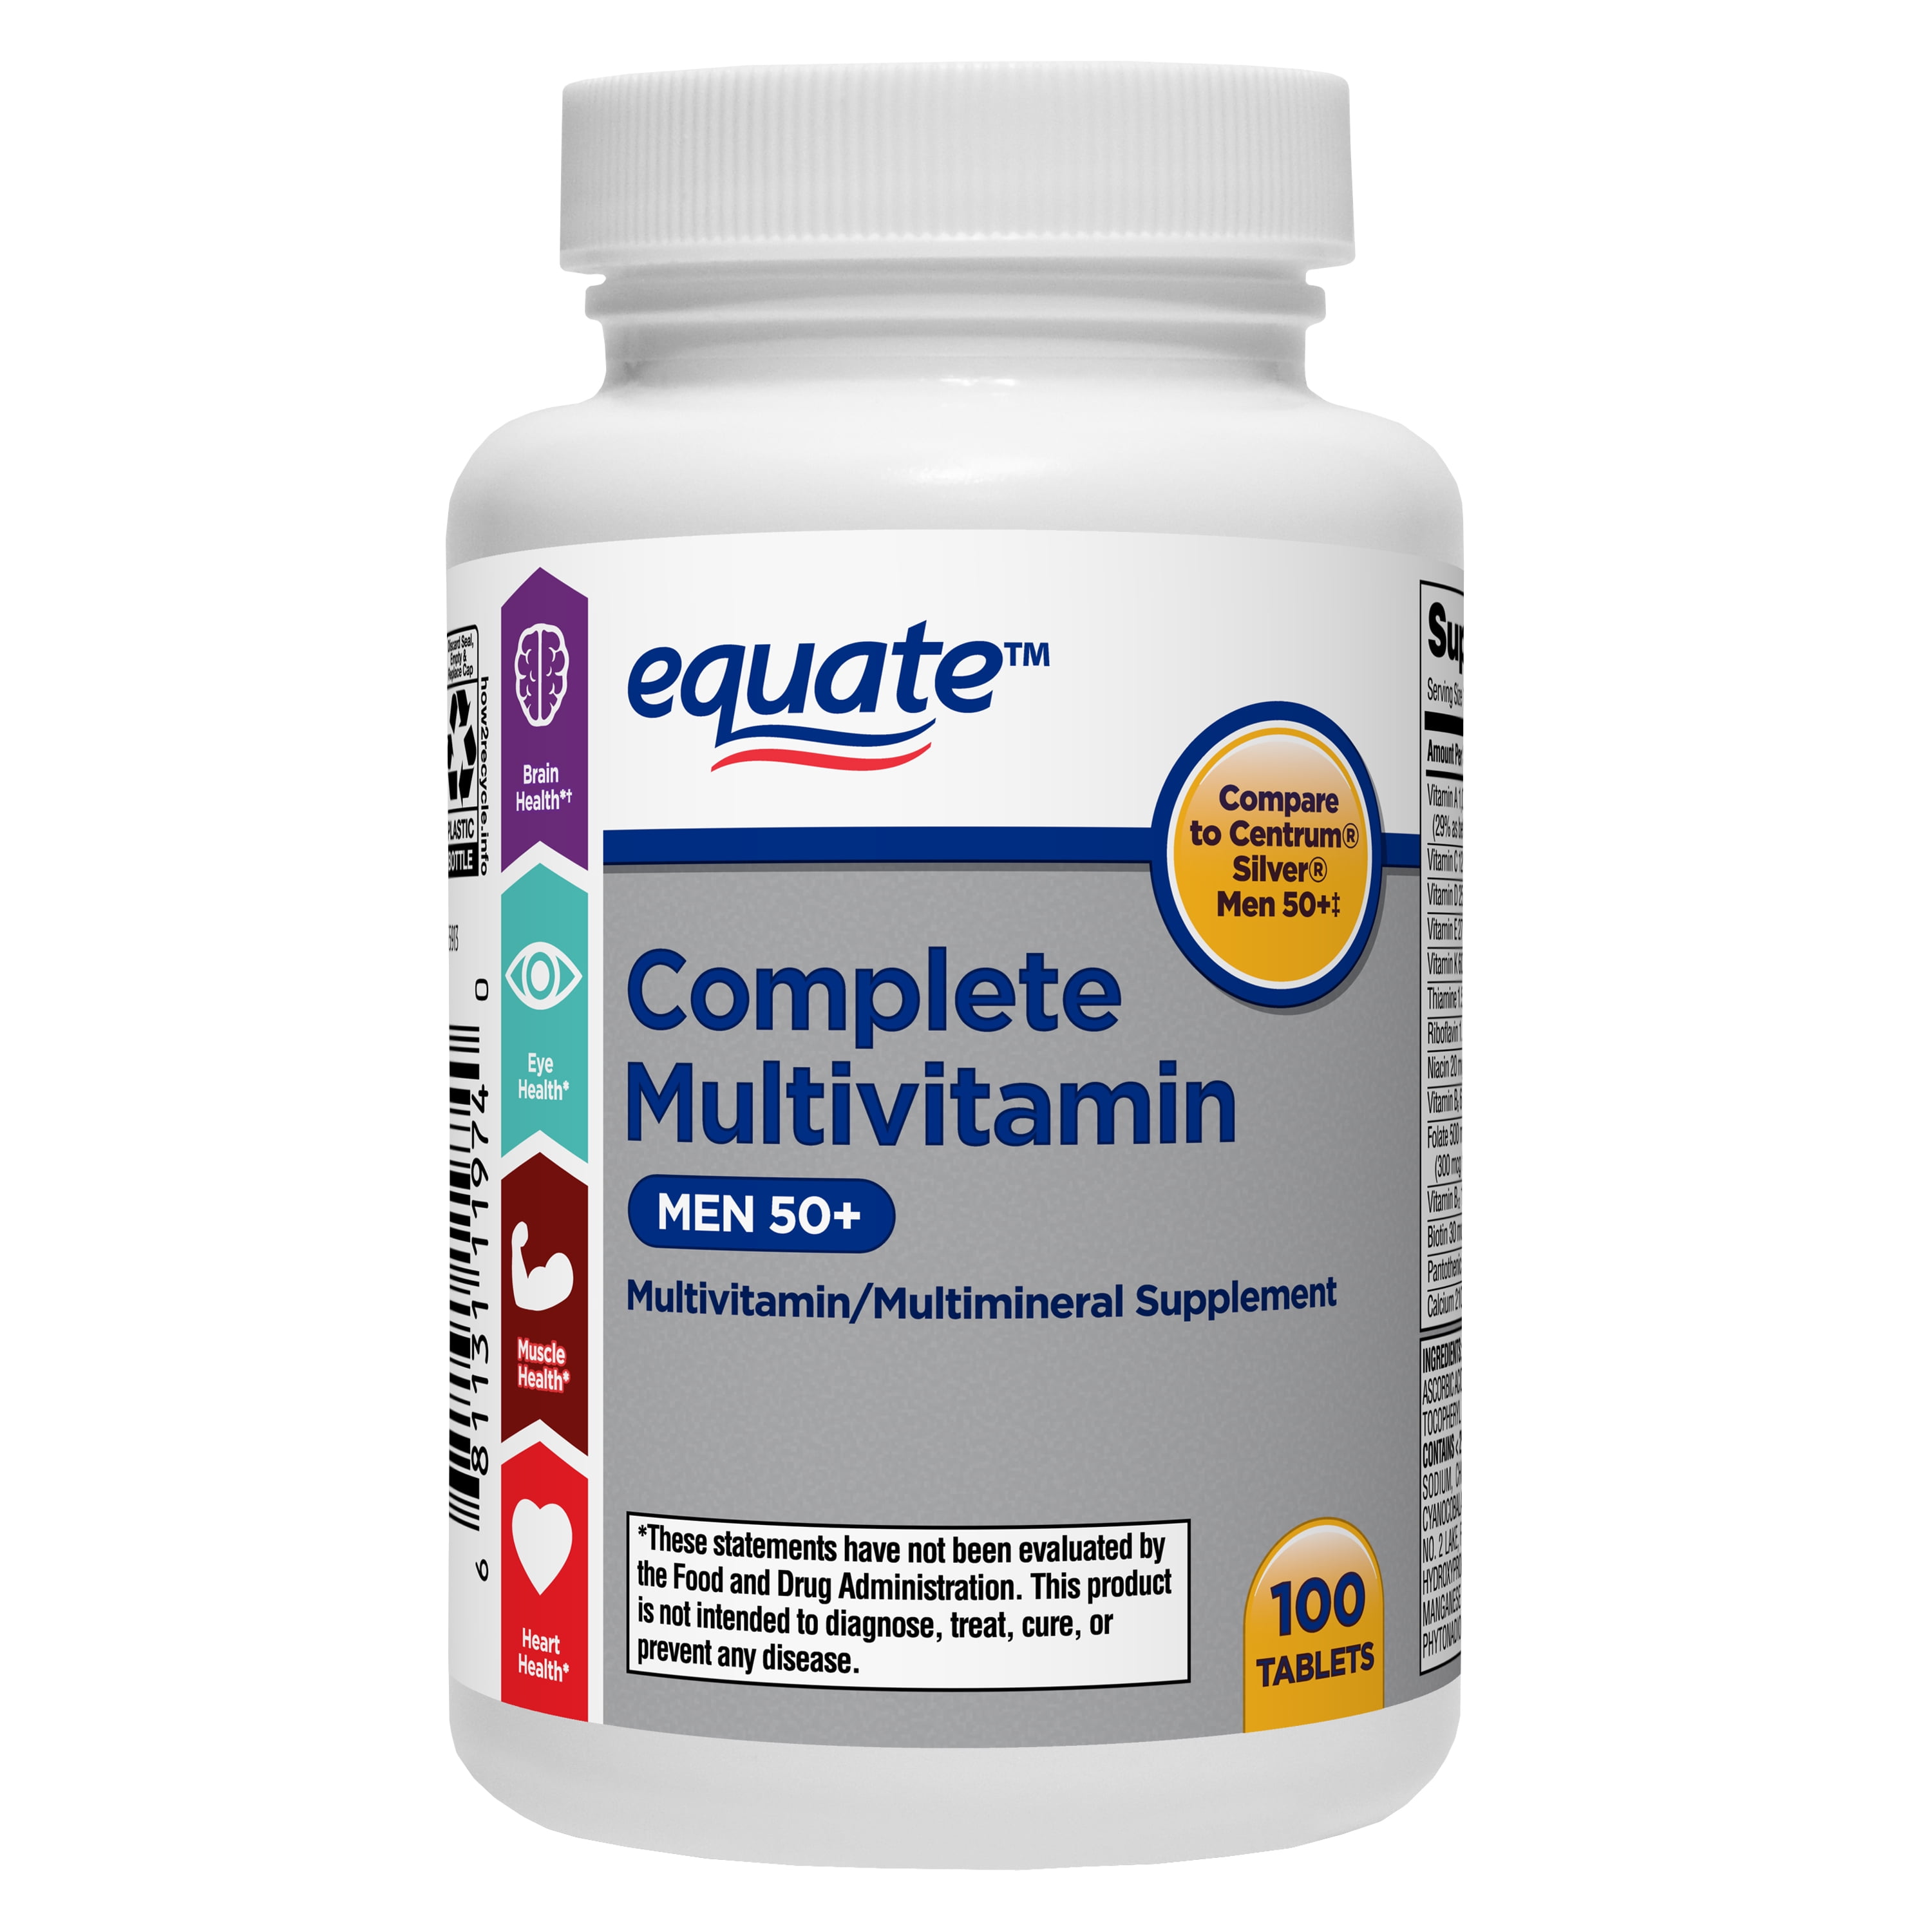 Equate Complete Multivitamin/Multimineral Supplement Tablets, Men 50+, 100 Count